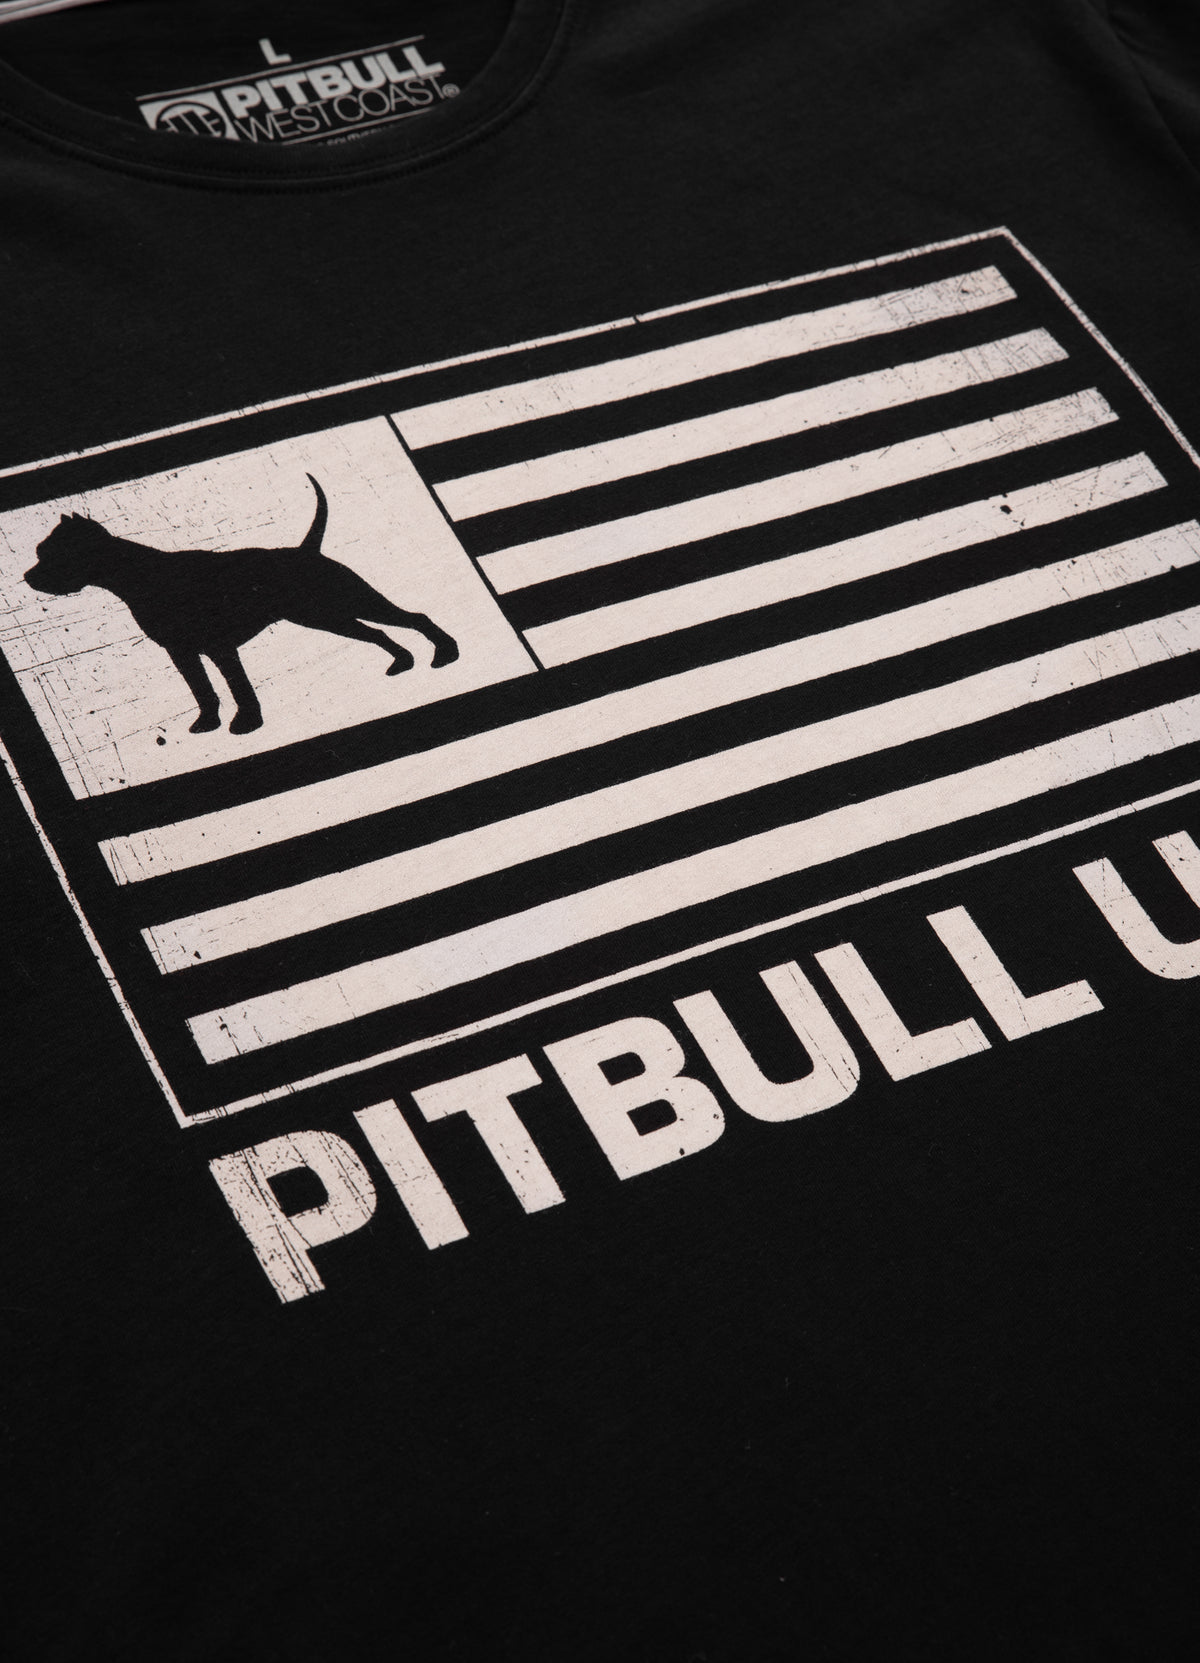 PITBULL USA Lightweight Black T-shirt - Pitbullstore.eu